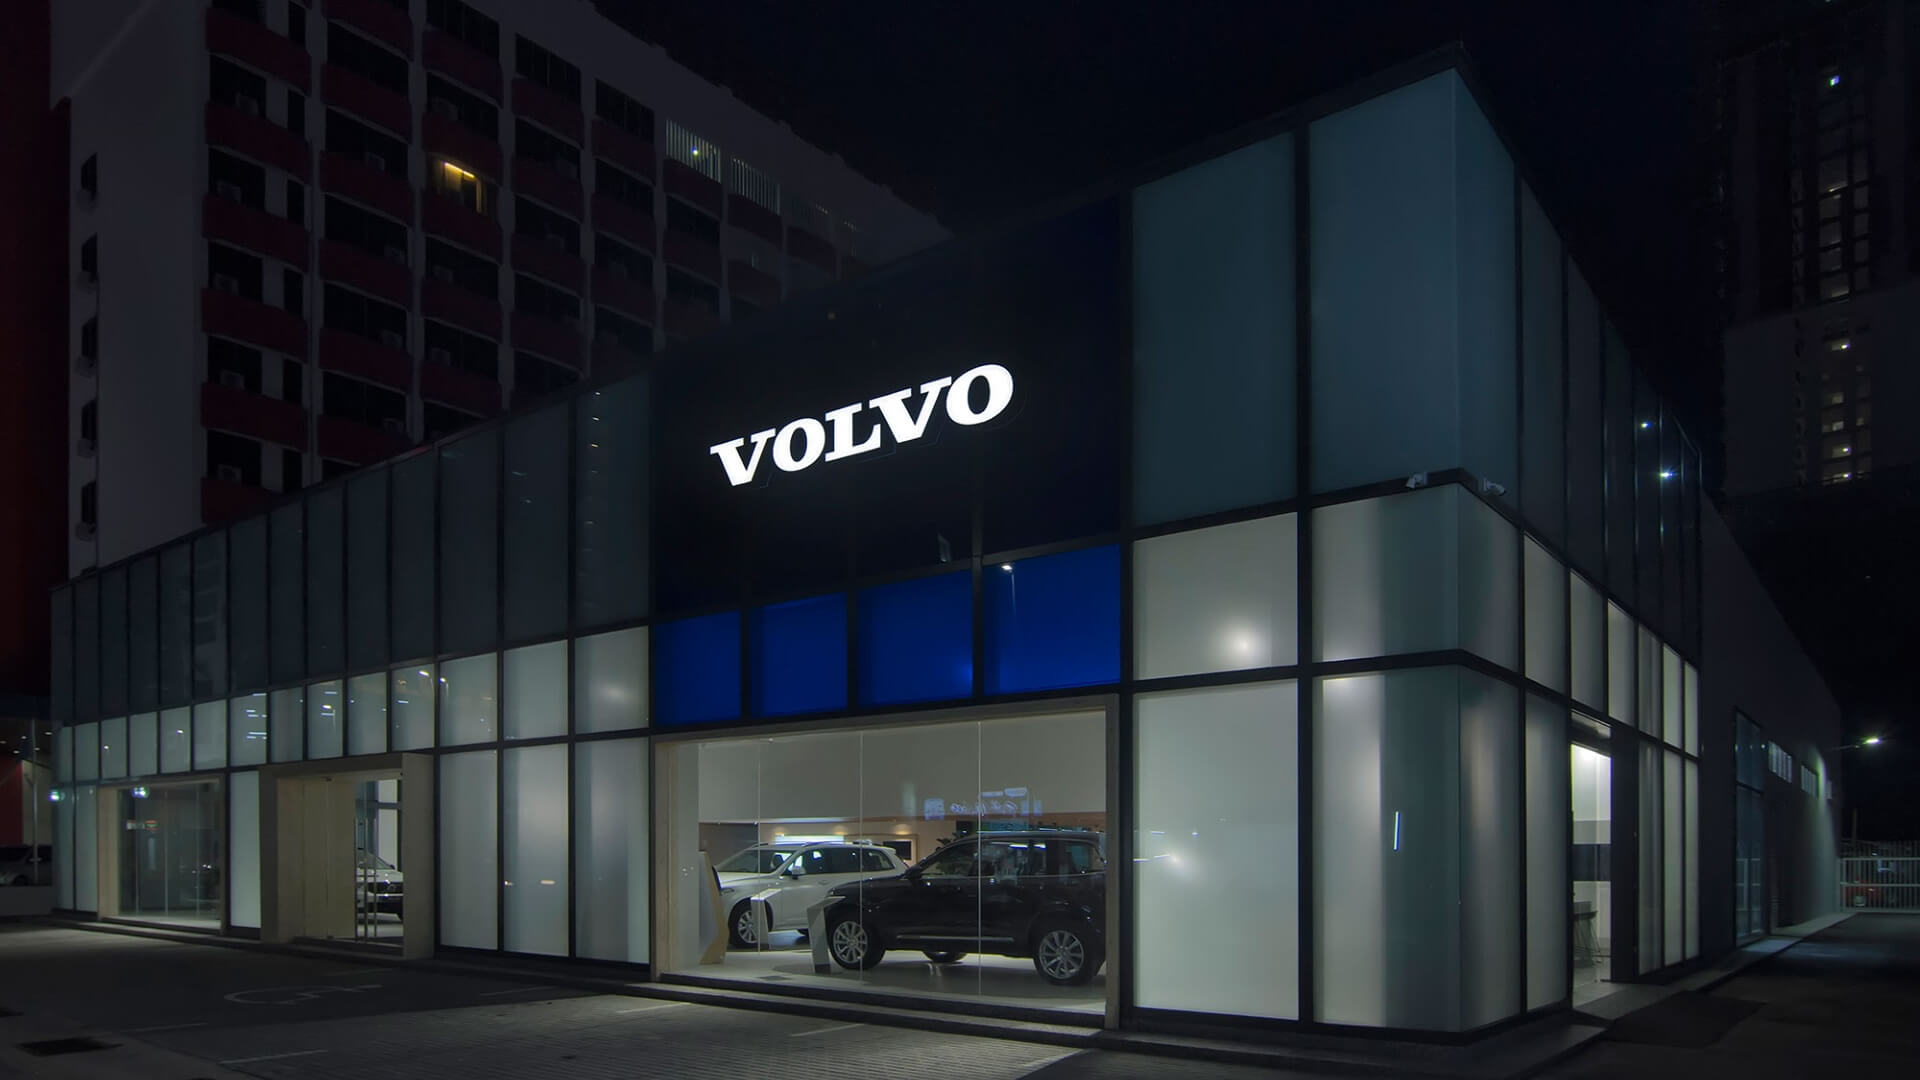 Volvo News & Events